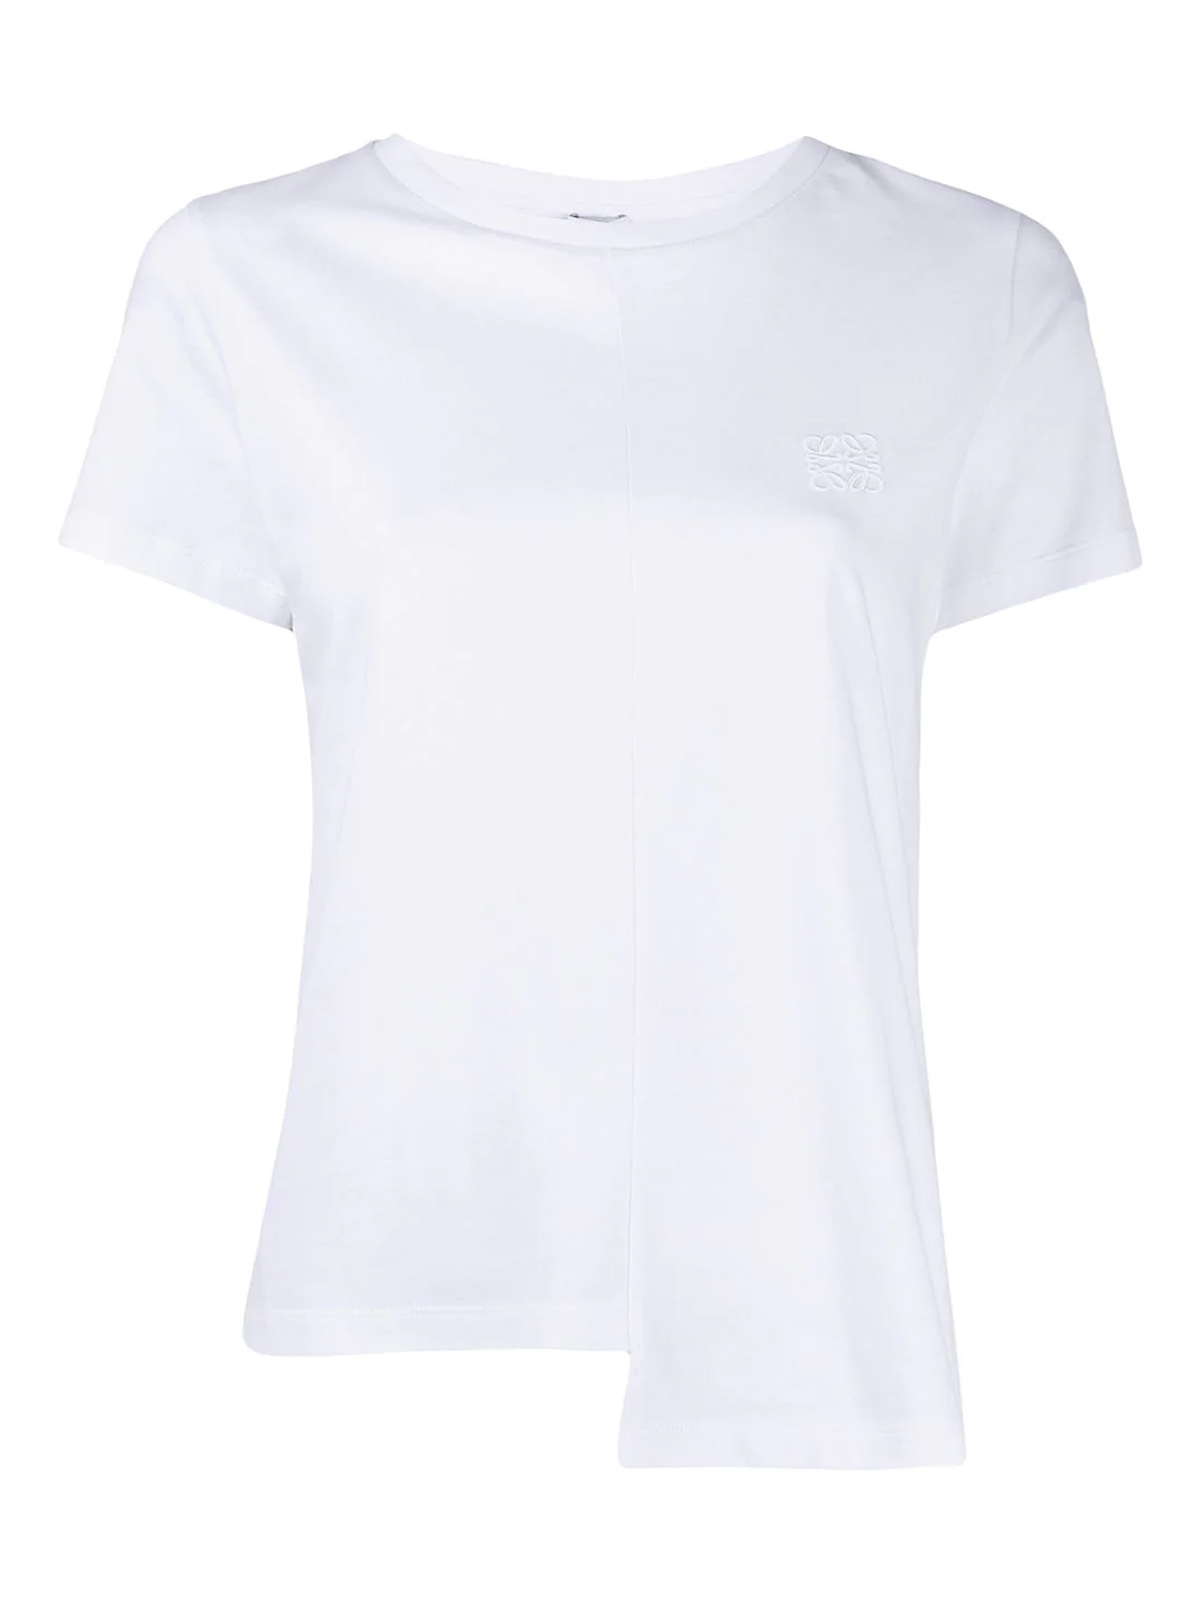 Loewe - Anagram asymmetric T-shirt in white - t-shirts - S6299062CR2100